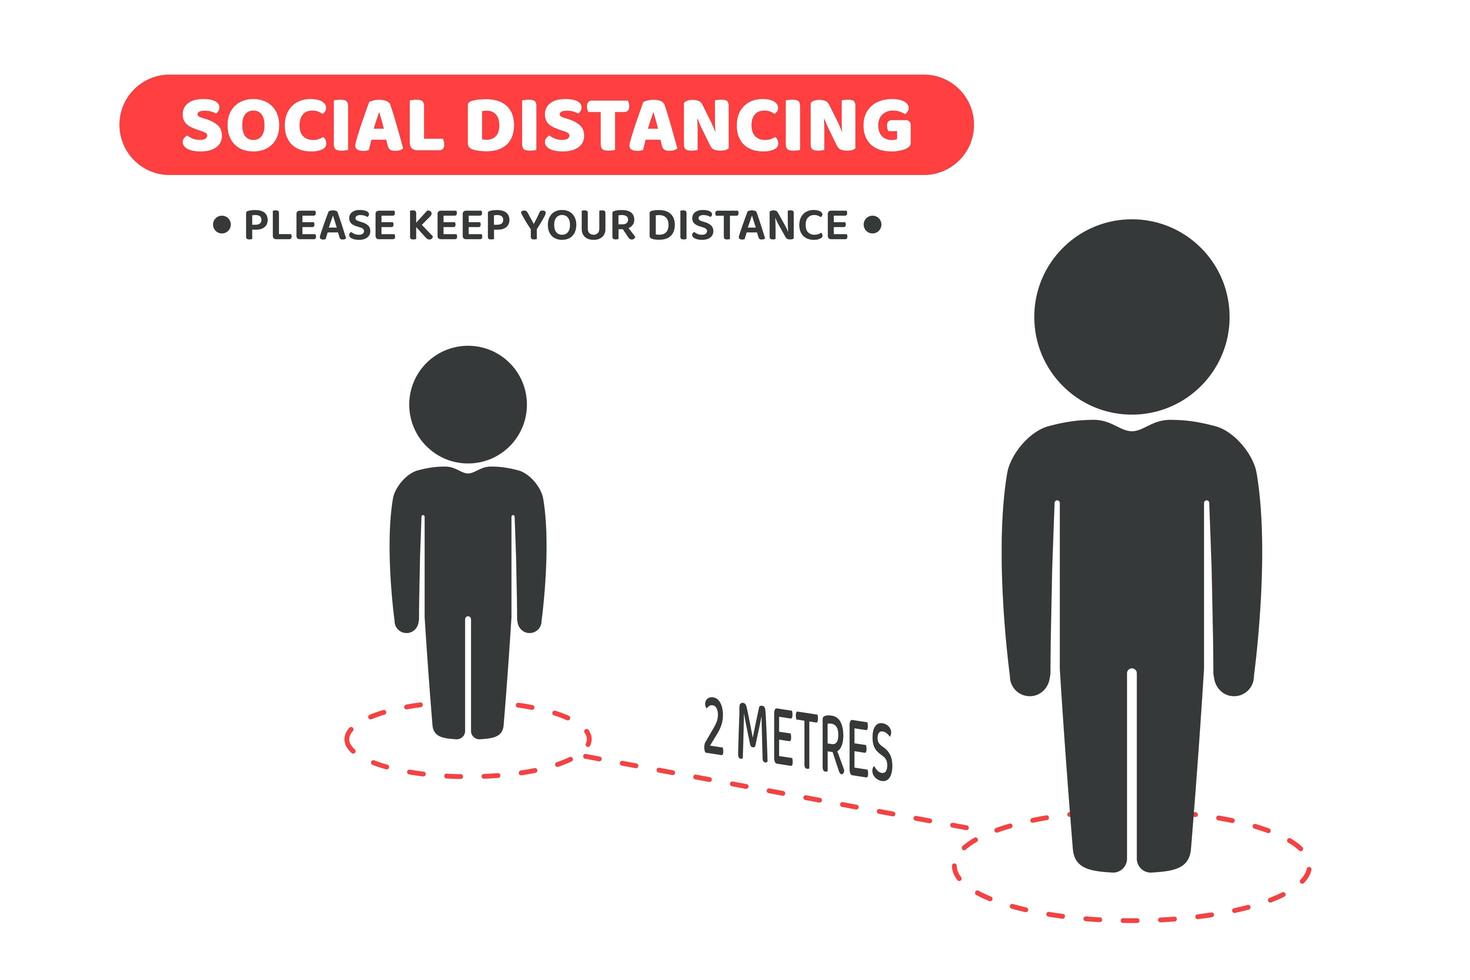 mantenerse a 2 metros de distancia signo de distanciamiento social vector